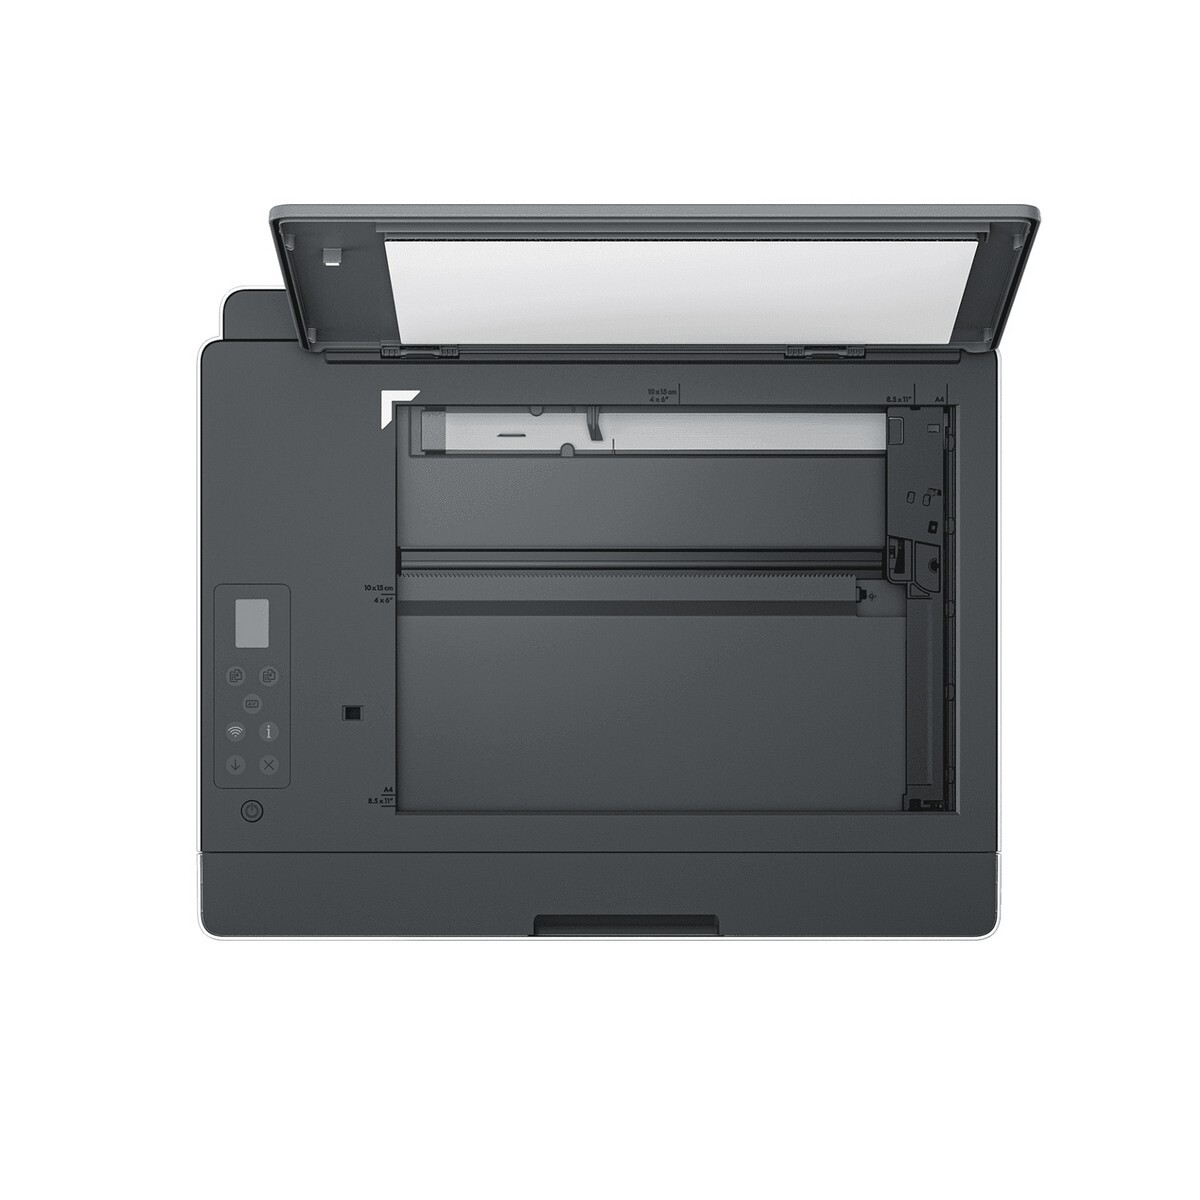 HP Smart Tank 580 All-in-one WiFi Colour Printer